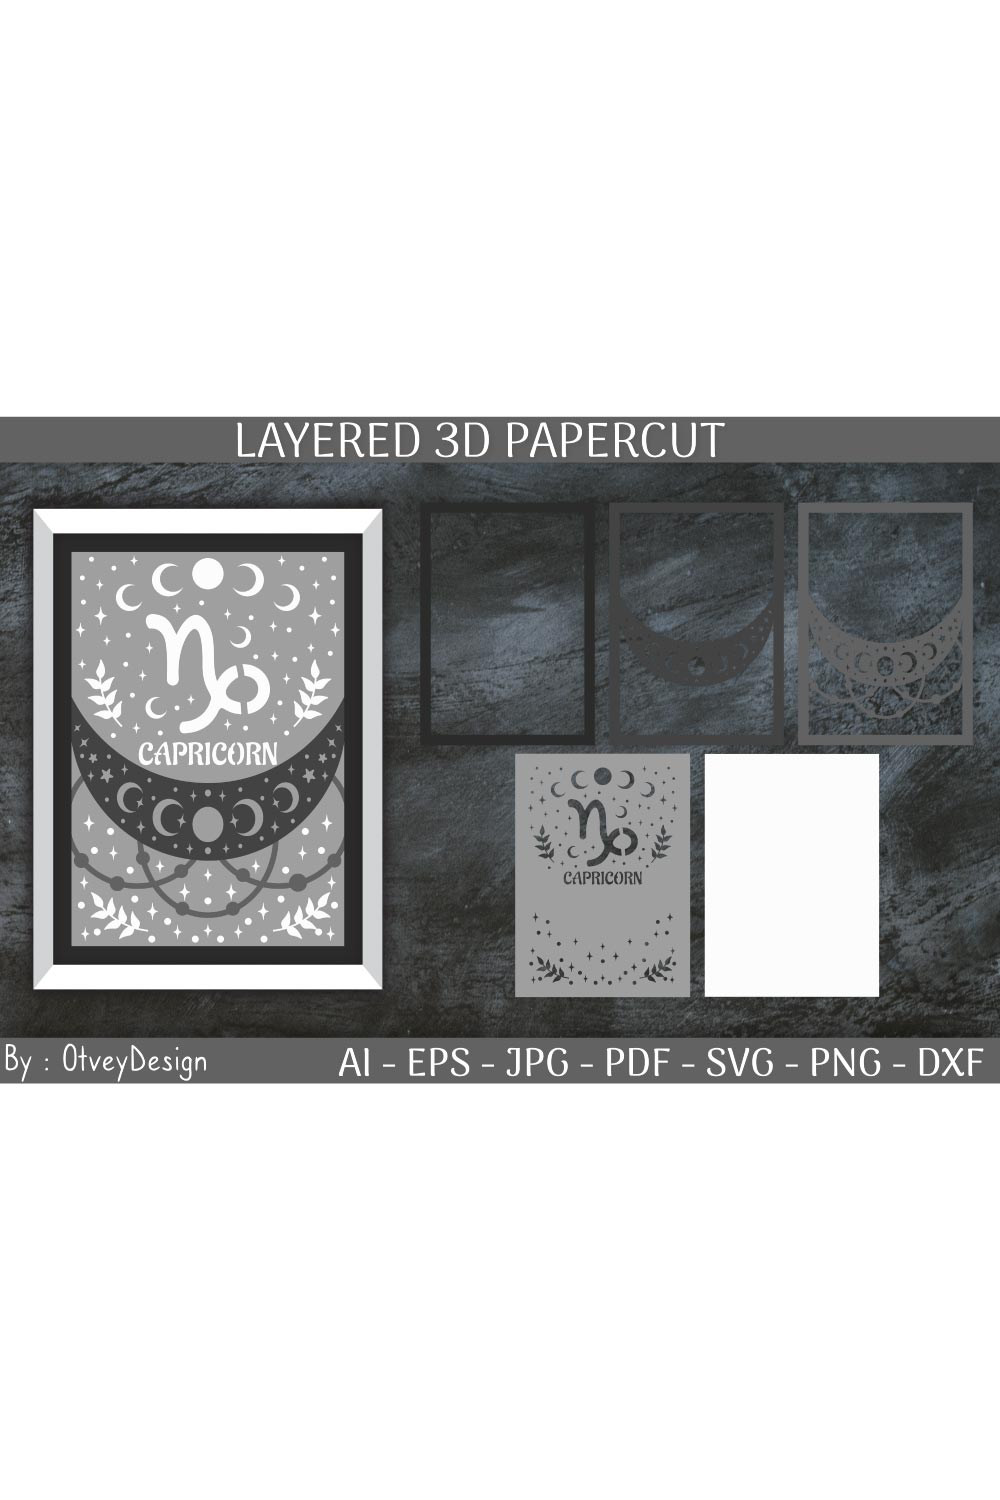 Capricorn Zodiac Signs Celestial 3D Layered Papercut pinterest preview image.